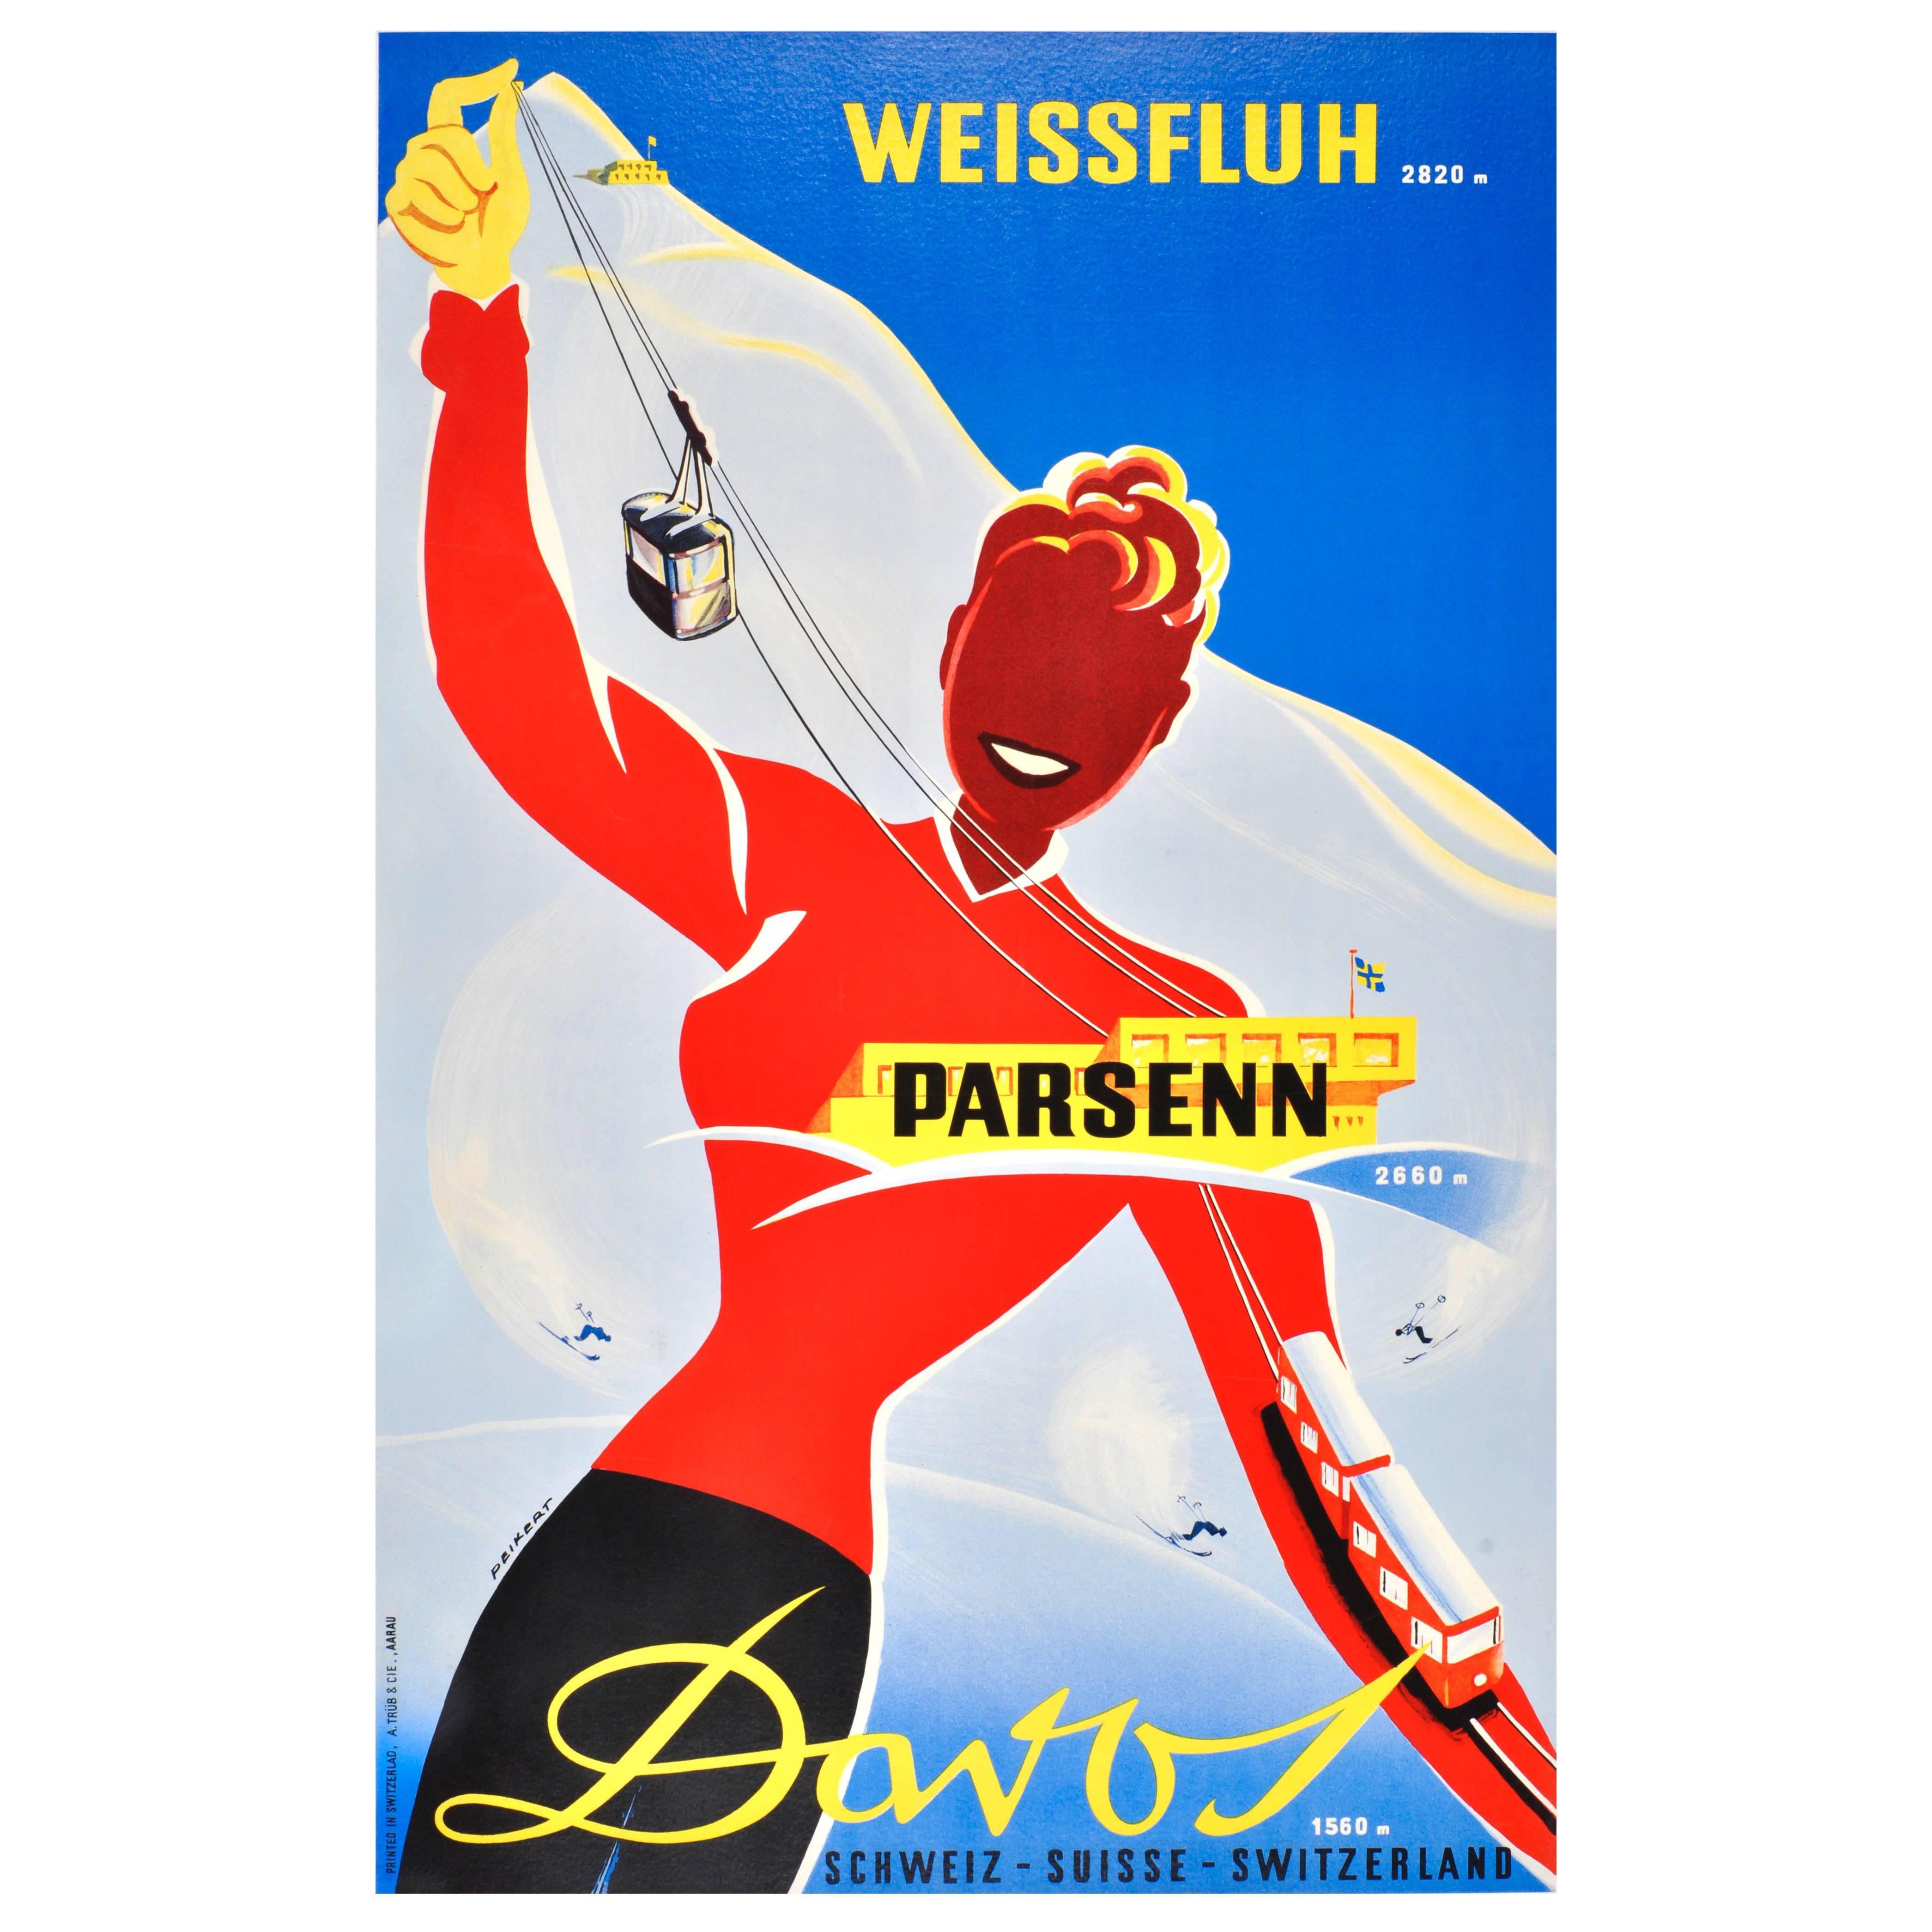 Original Vintage 1938 Ski Resort Poster by Martin Peikert for Davos Switzerland